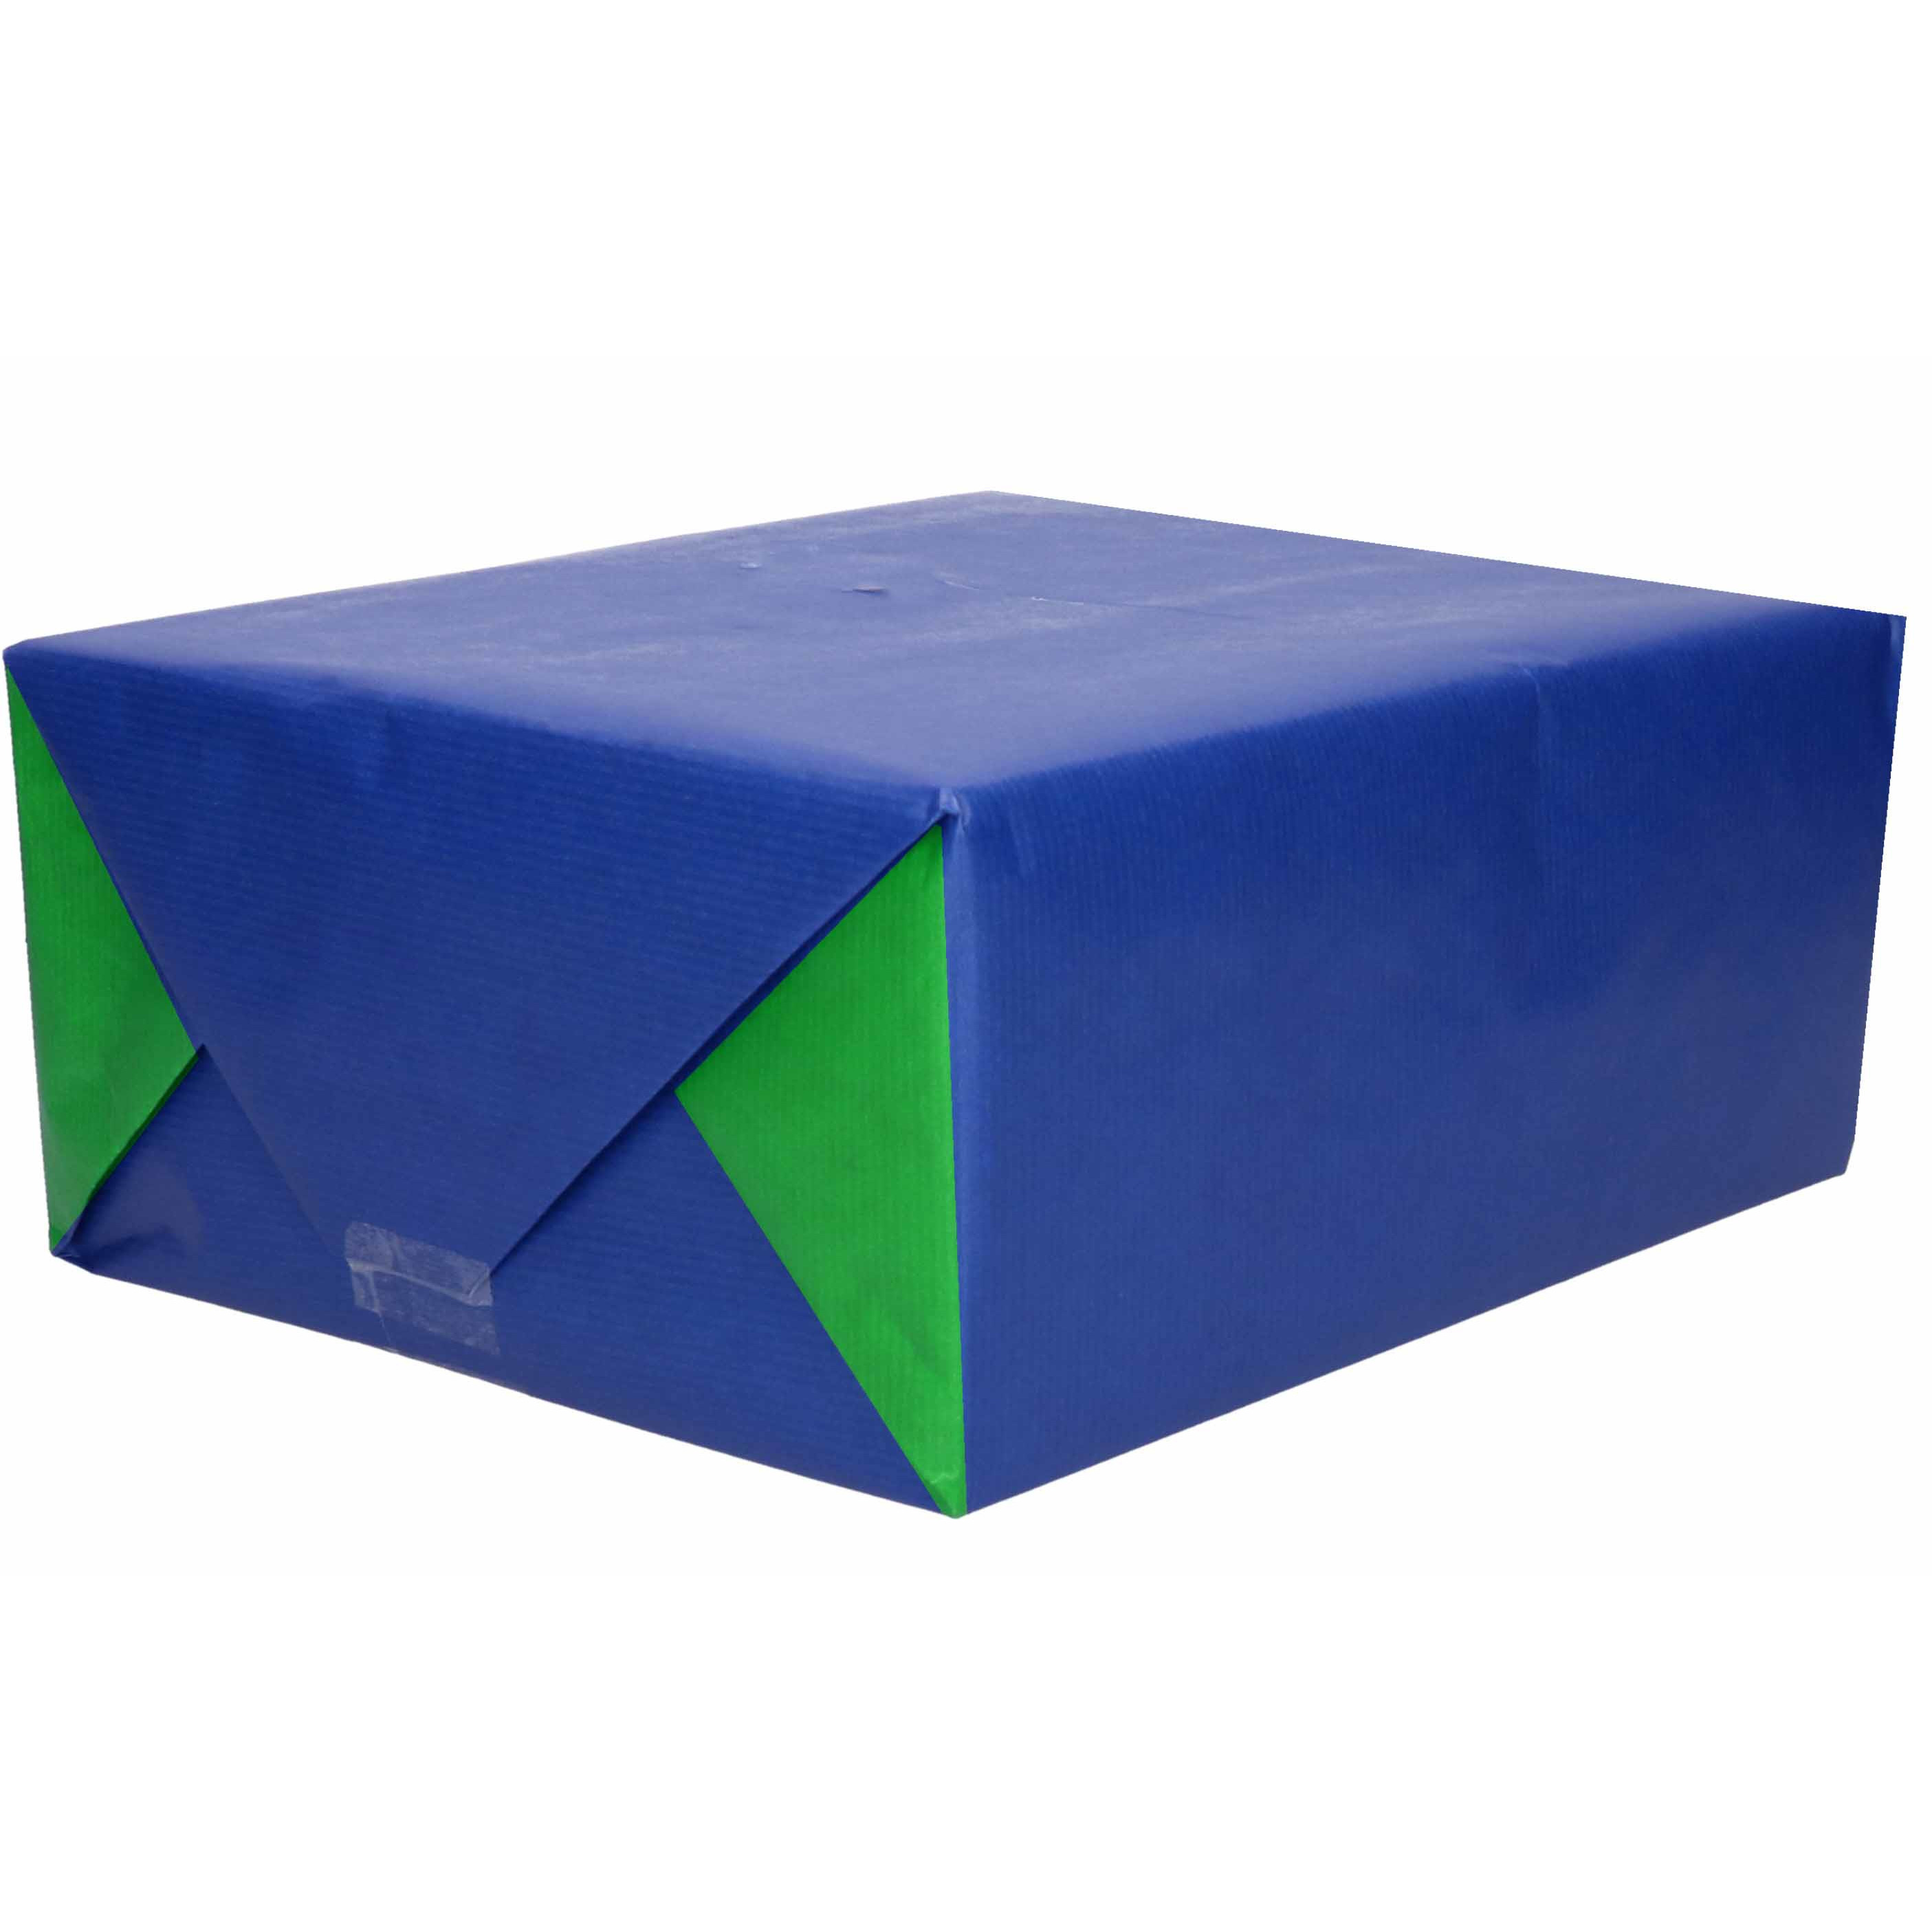 Cadeaupapier/Inpakpapier dubbelzijdig blauw / groen 200 x 70 cm